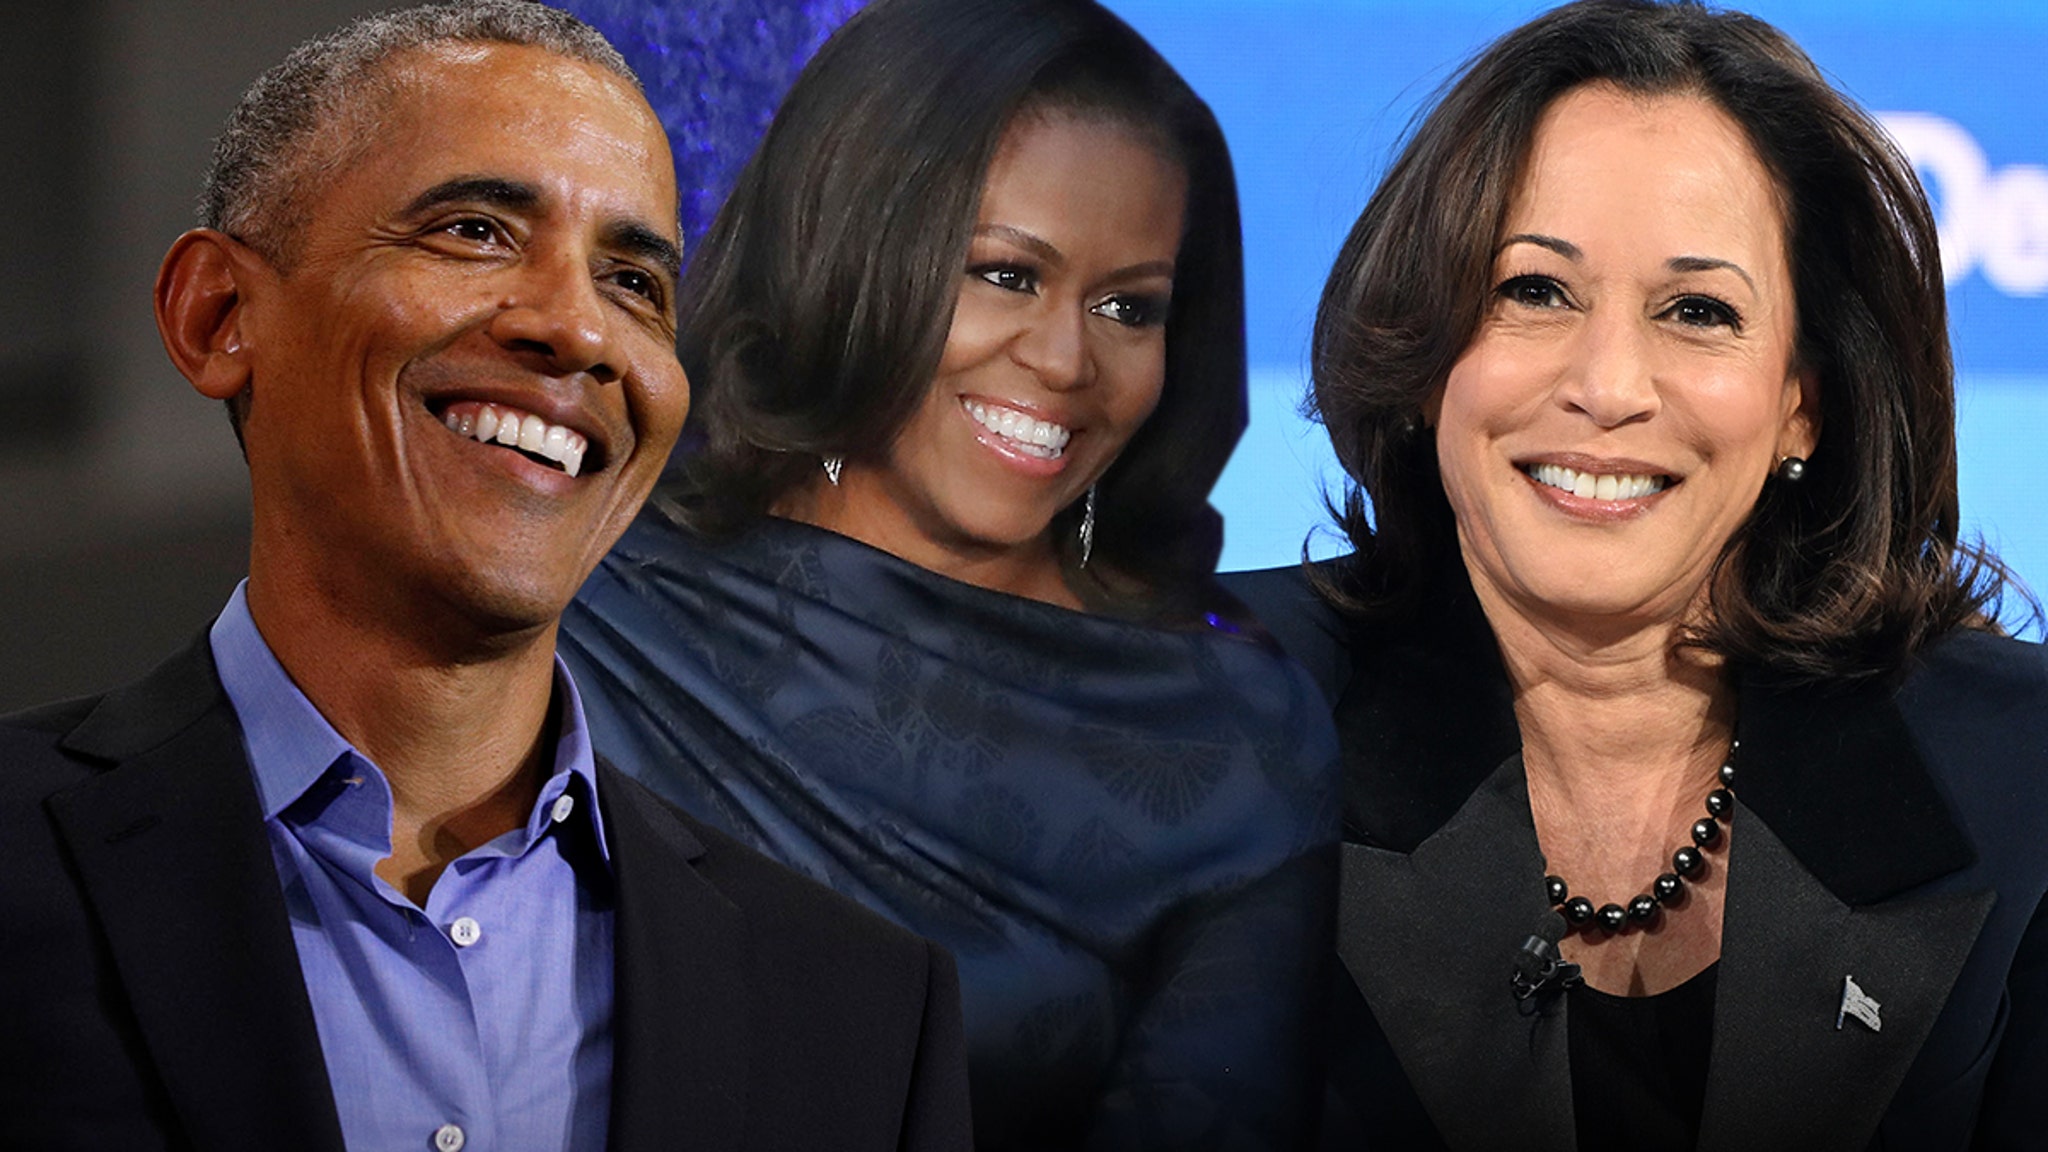 Barack Obama and Michelle Obama Endorse Kamala Harris For President